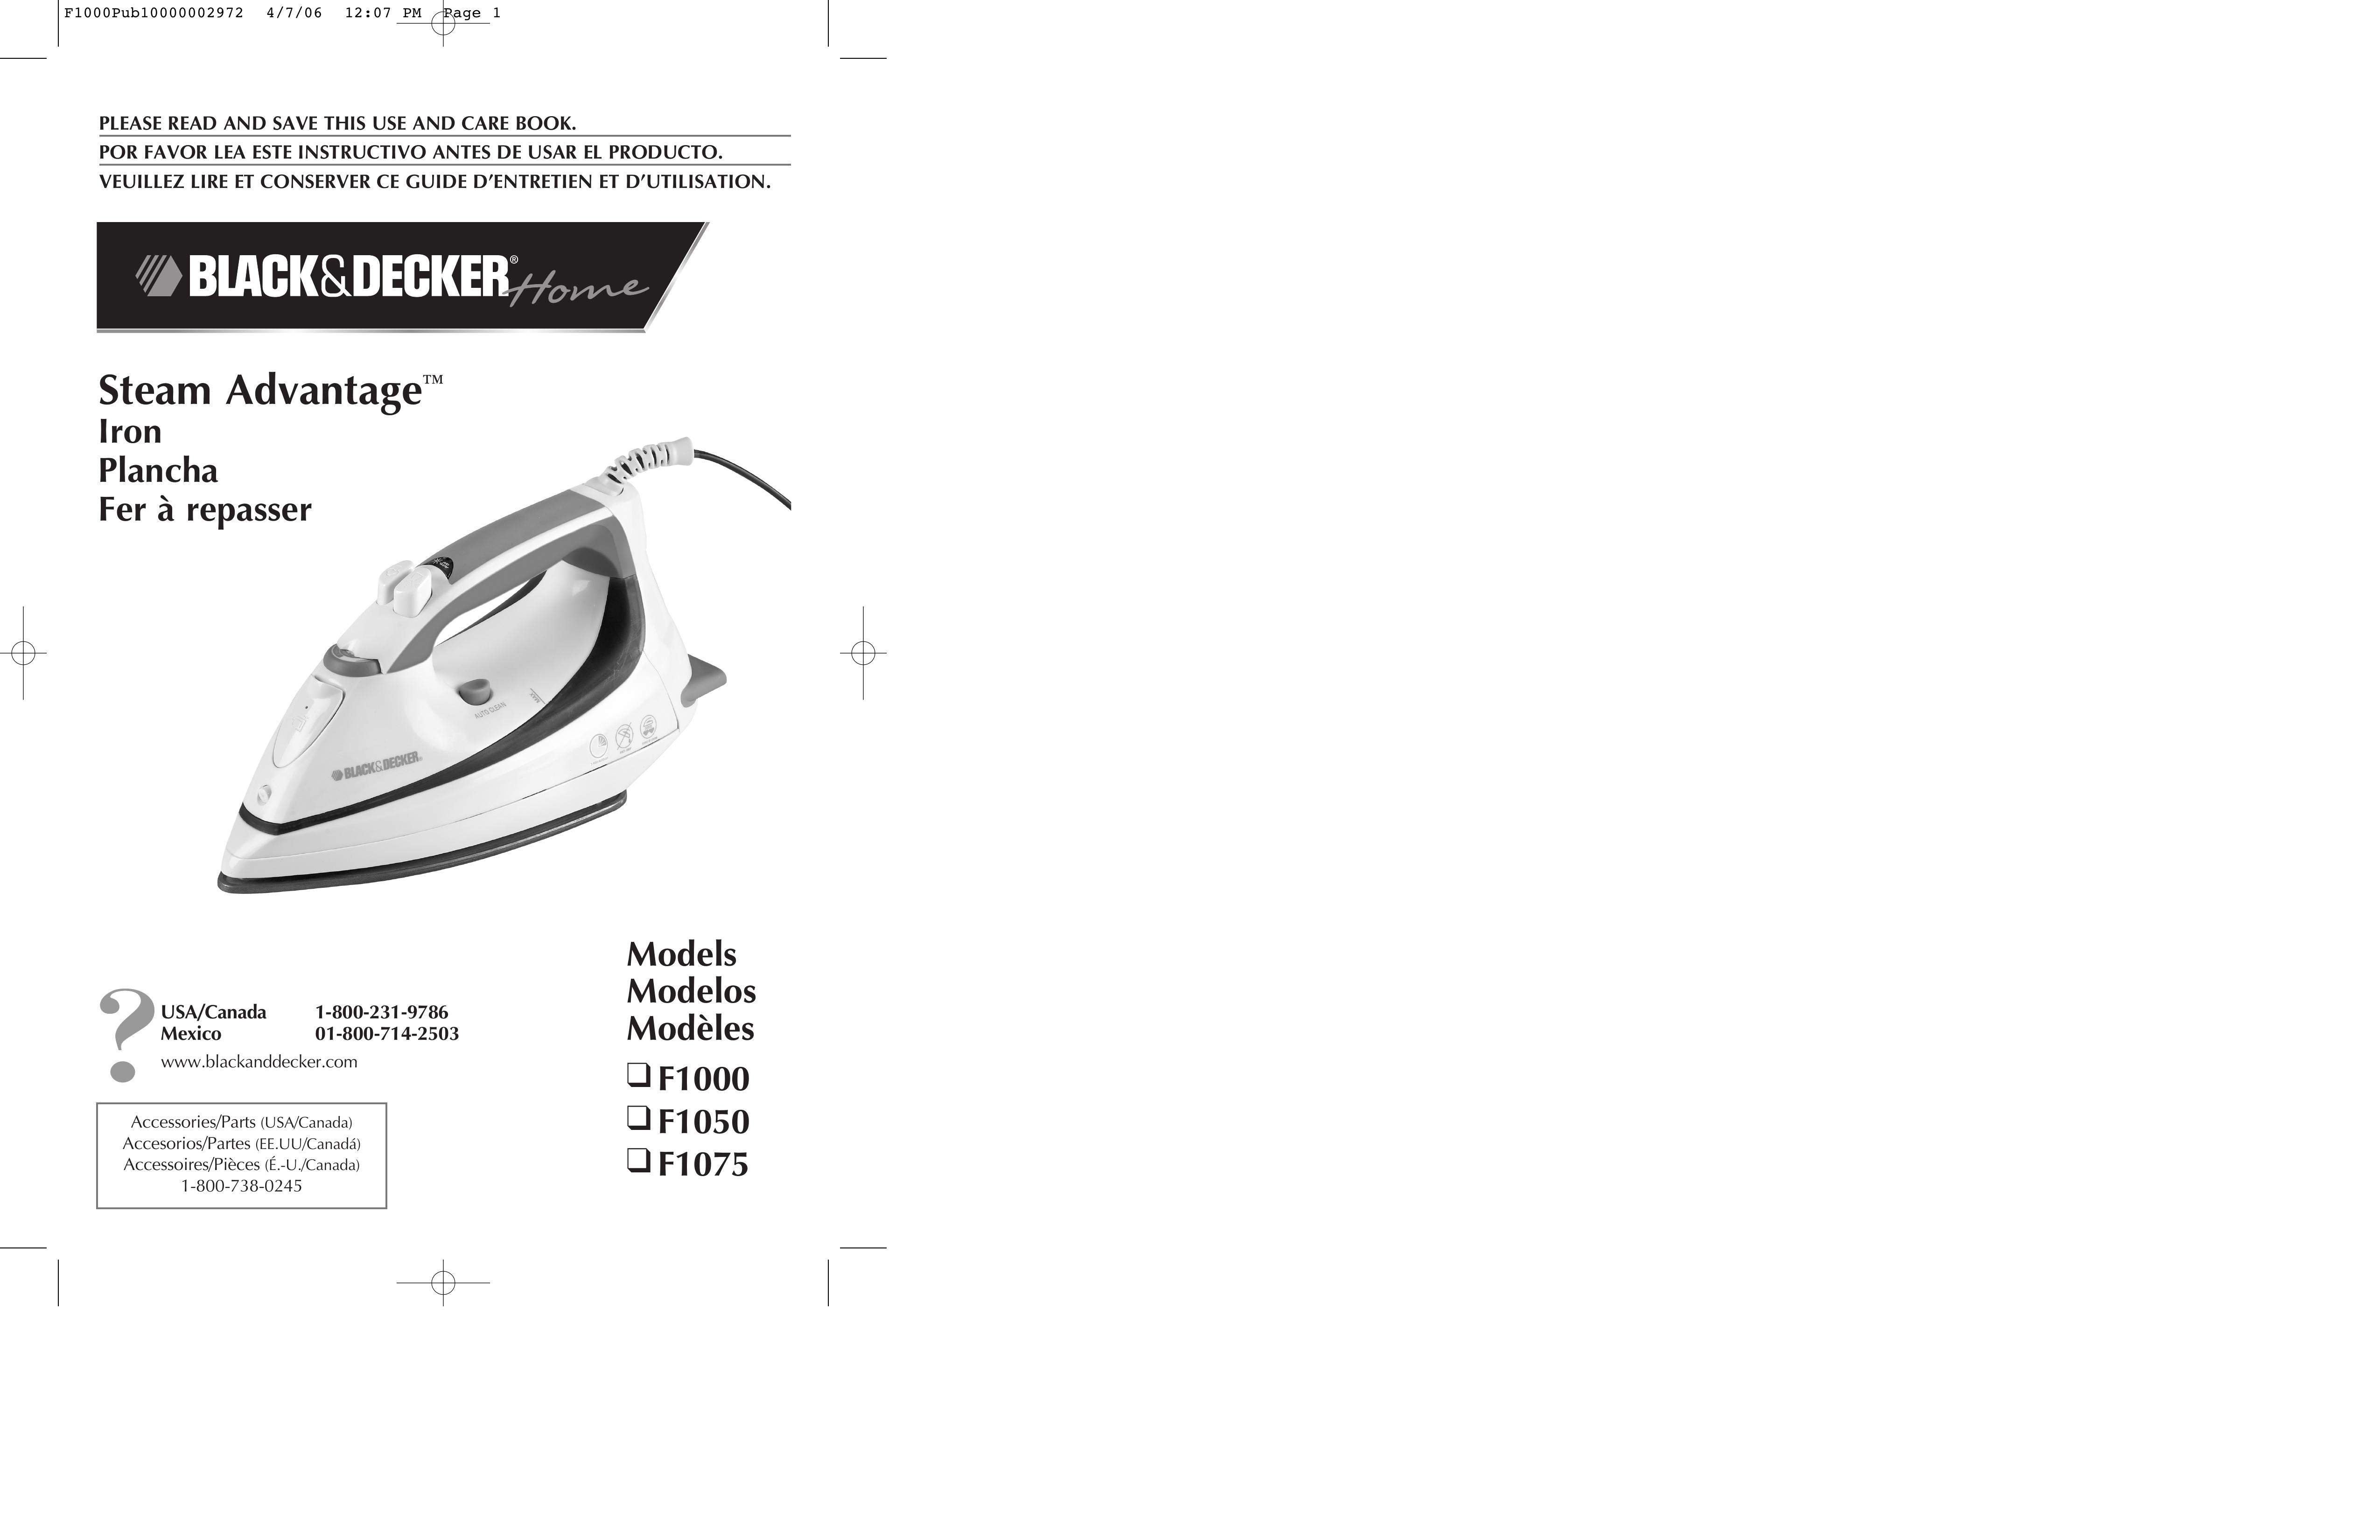 Black & Decker F1075 Iron User Manual